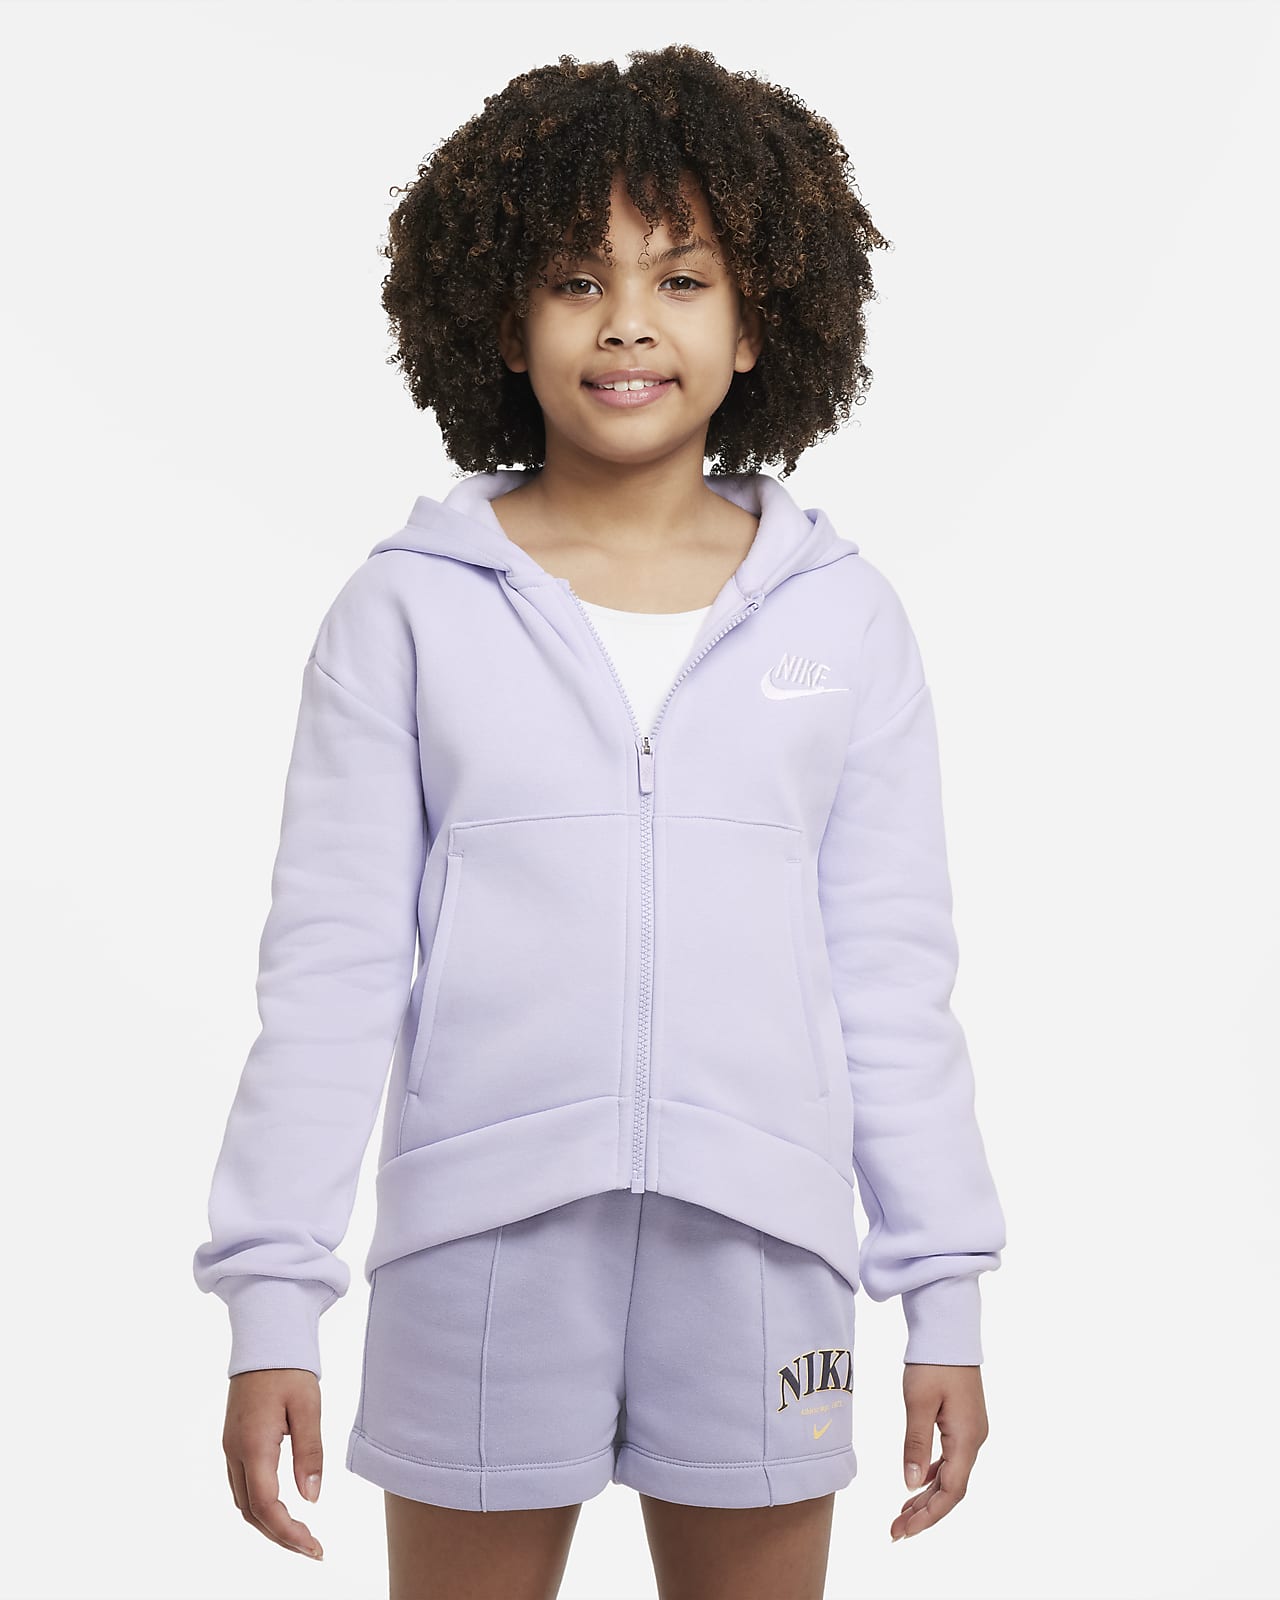 Nike Sportswear Club Fleece Older Kids' (Girls') Full-Zip Hoodie